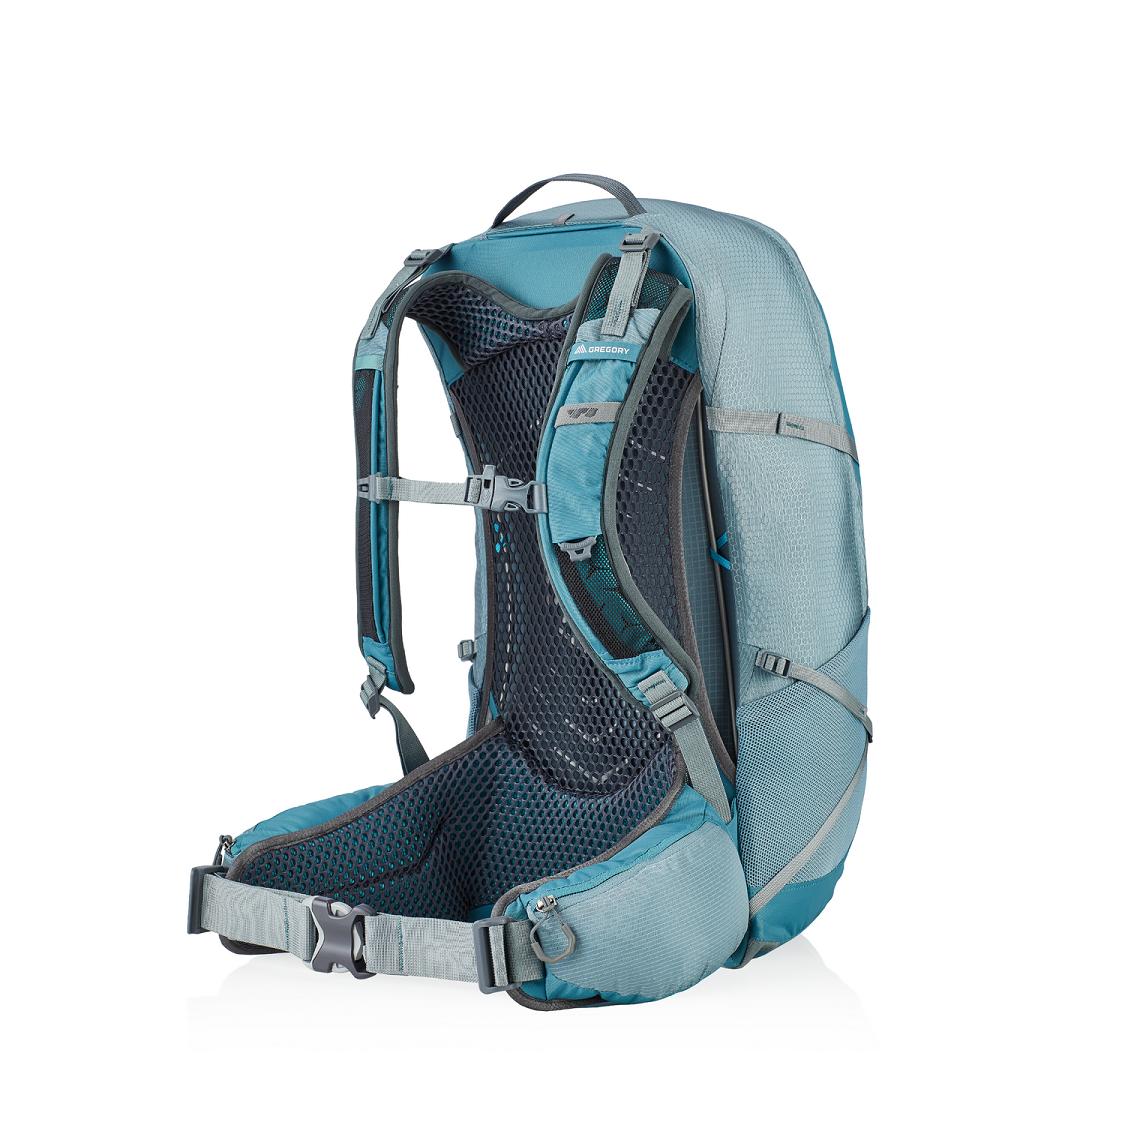 Women Gregory Juno 30 Hiking Backpack Blue Usa Sale KZSB13490